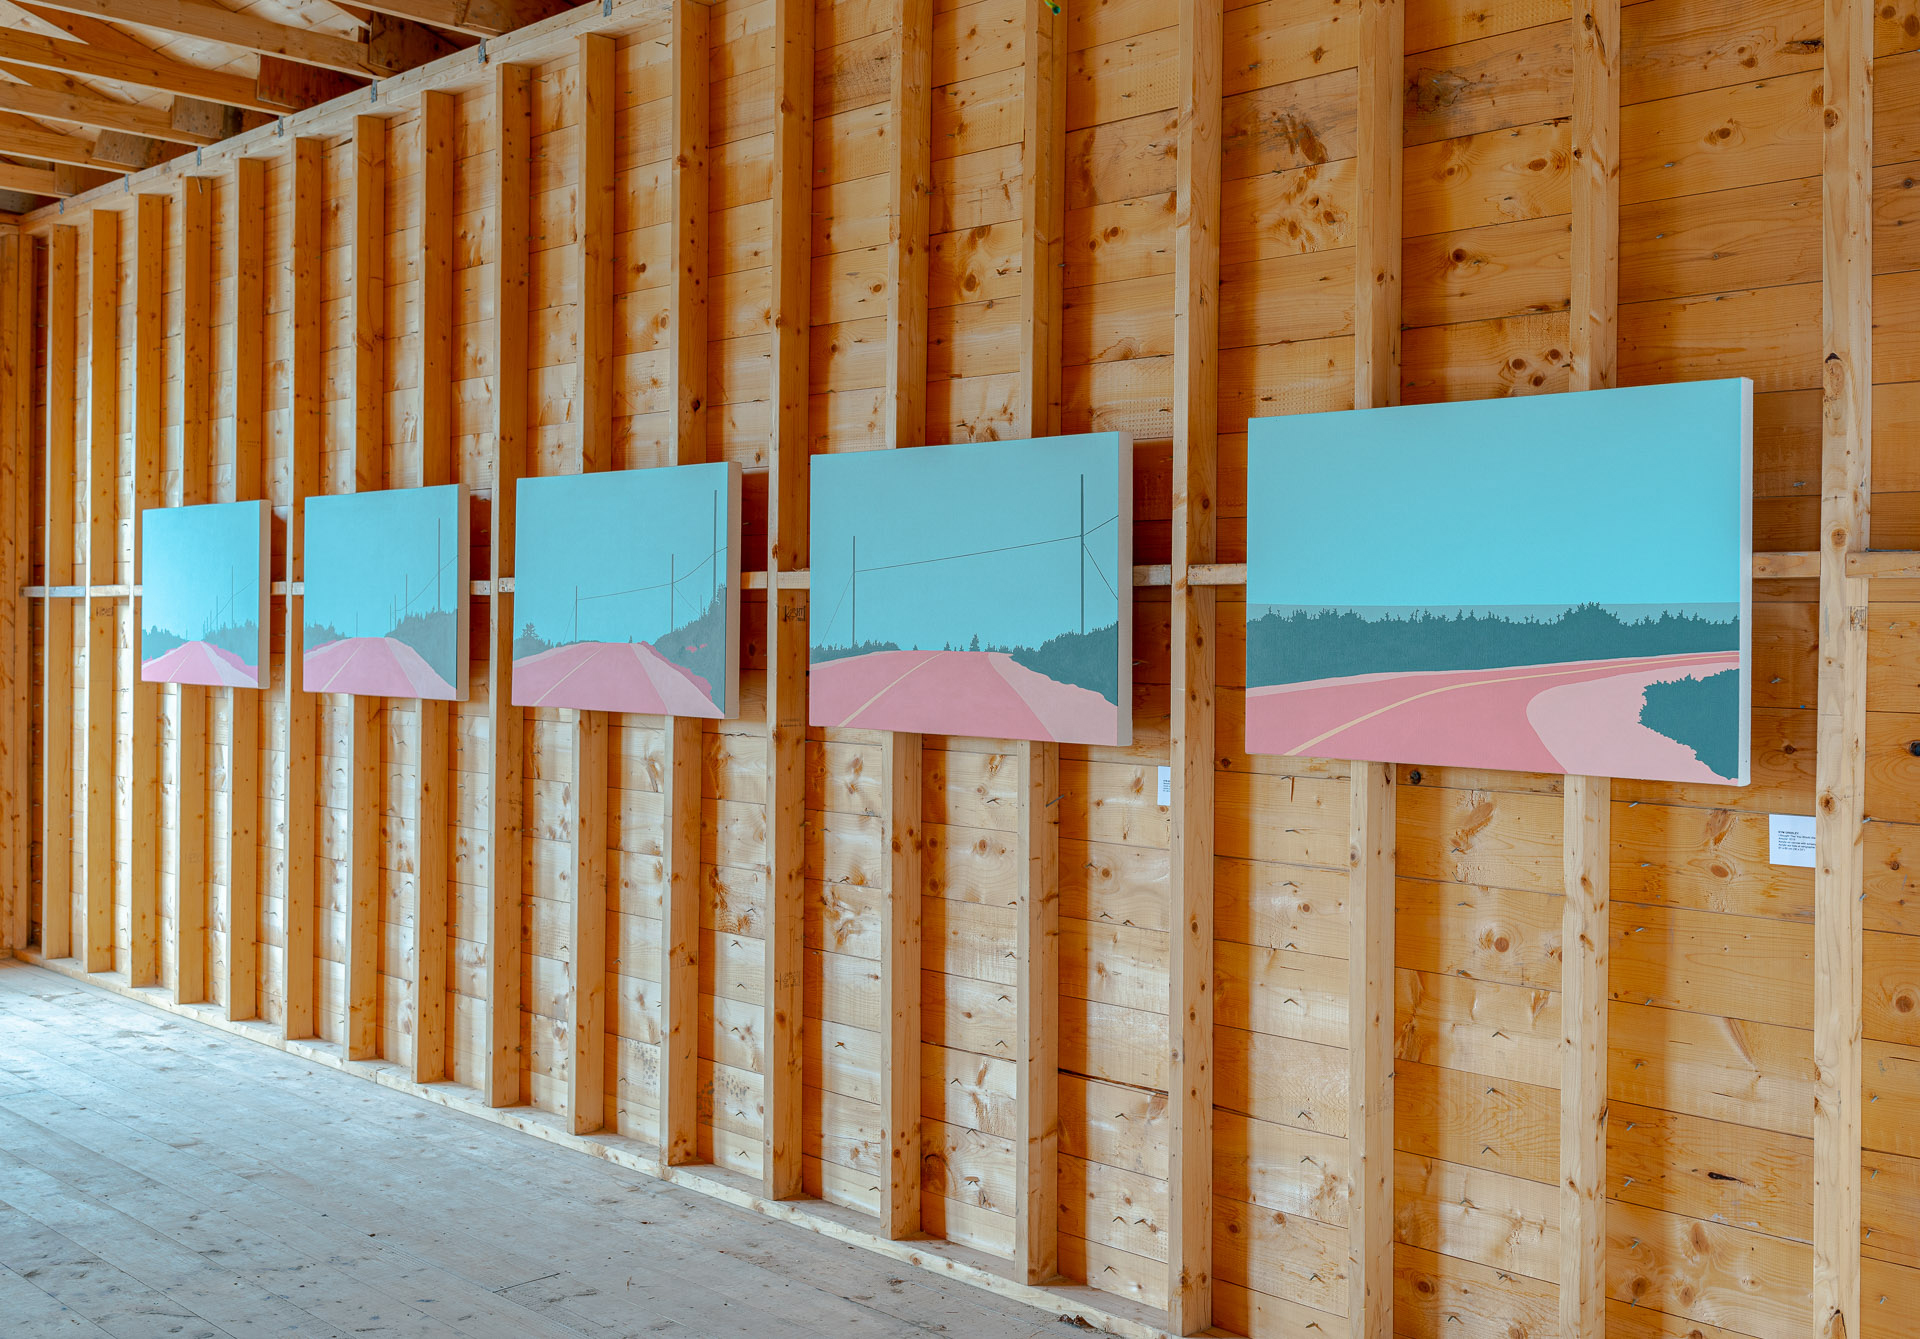 Install Shot – FLOE- Bonavista Biennale